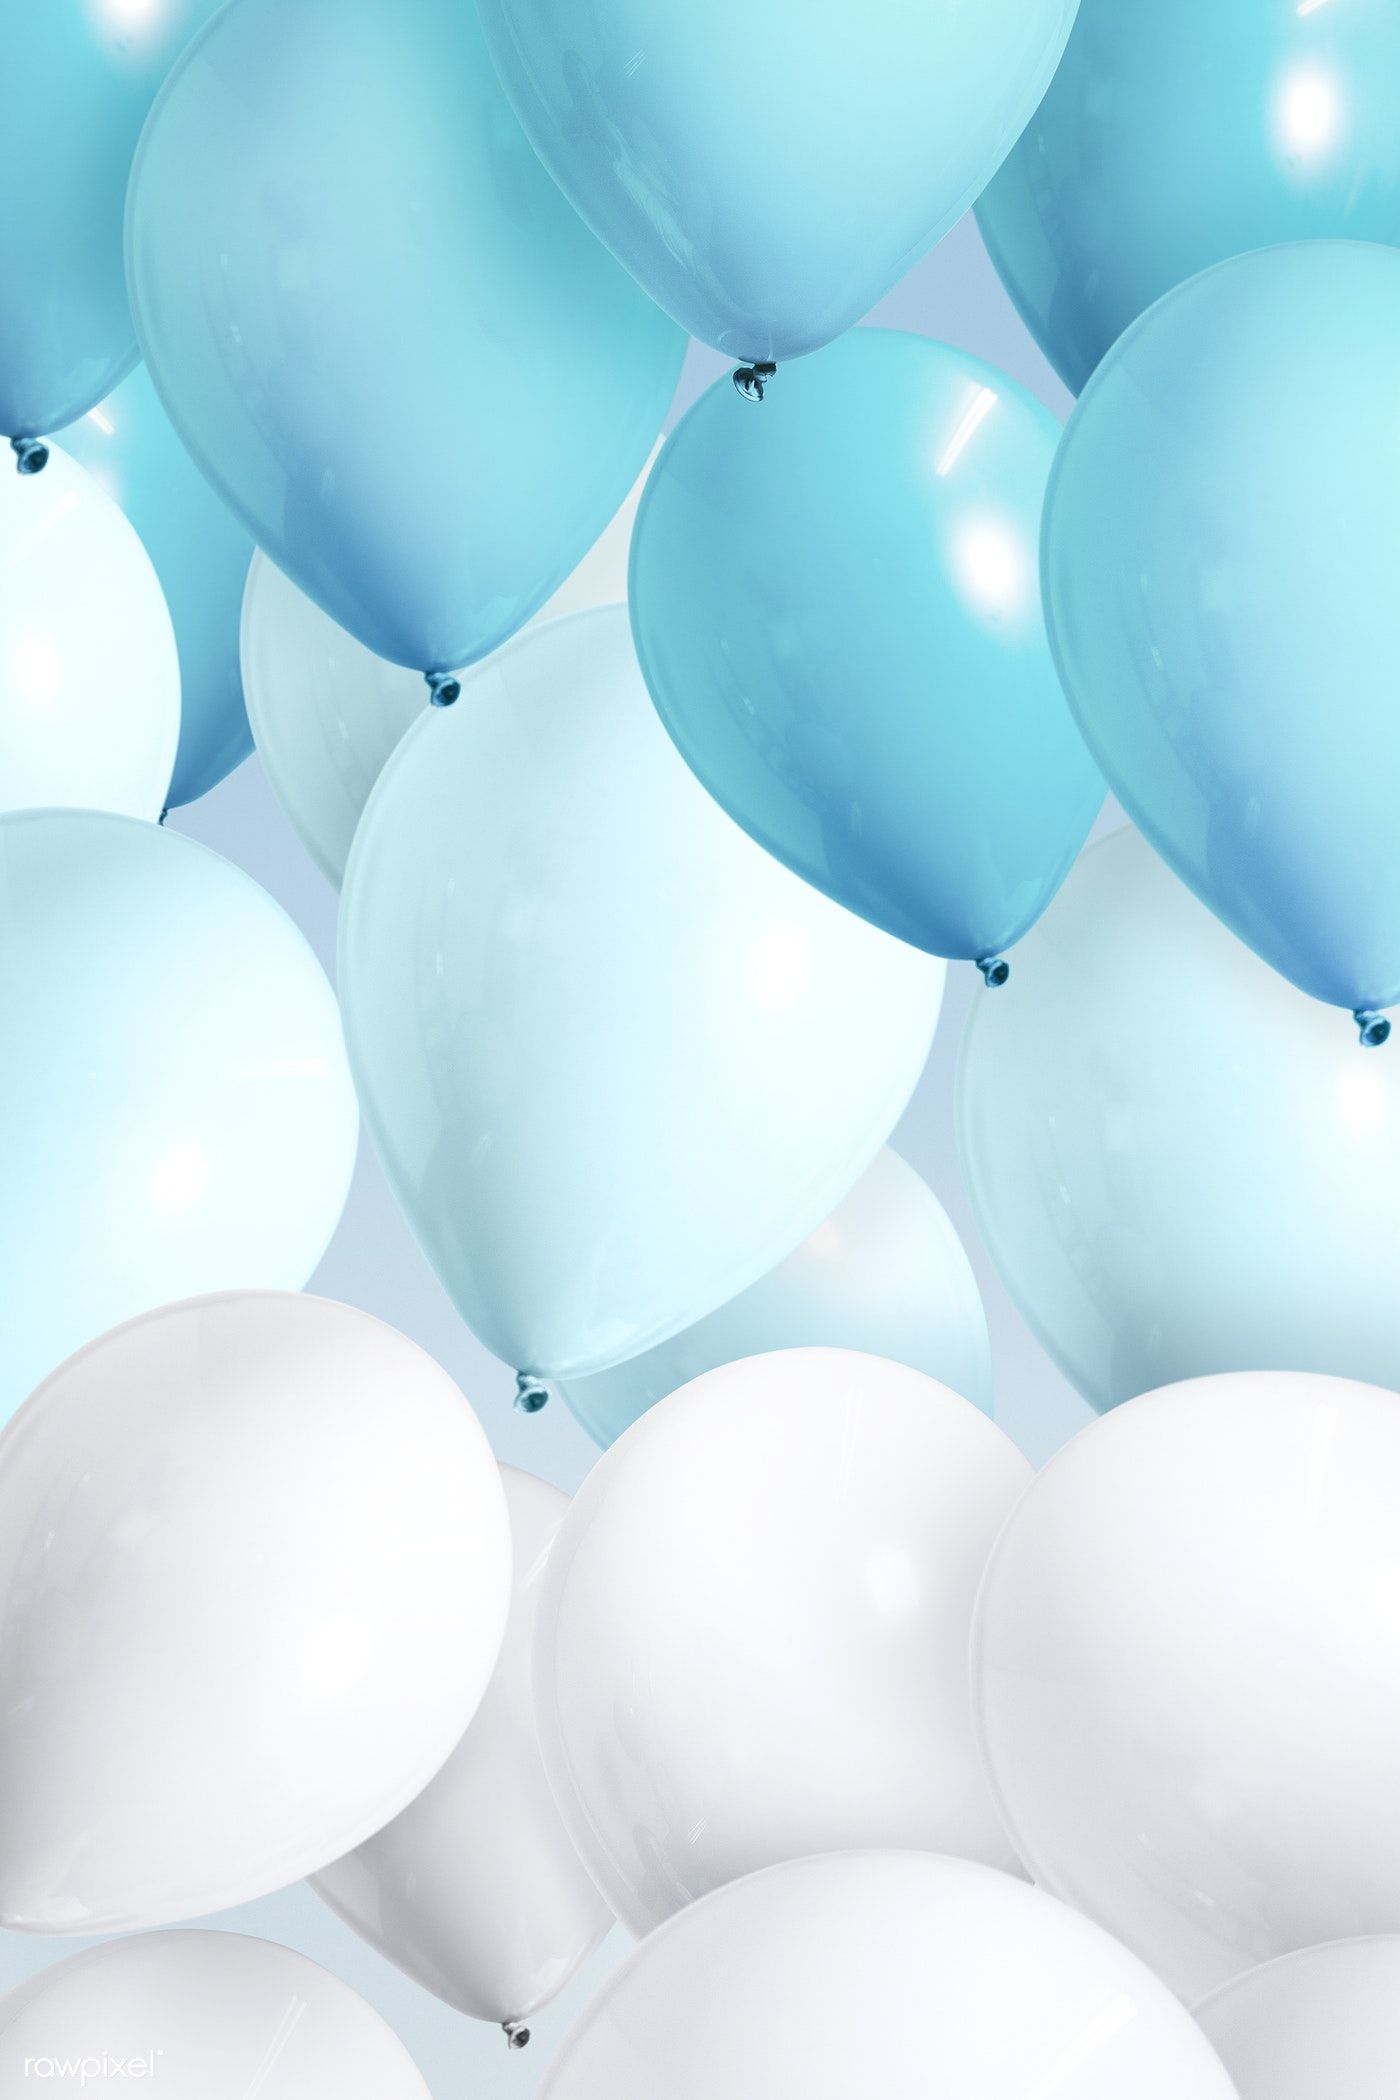 Pastel blue balloons wallpaper design .com